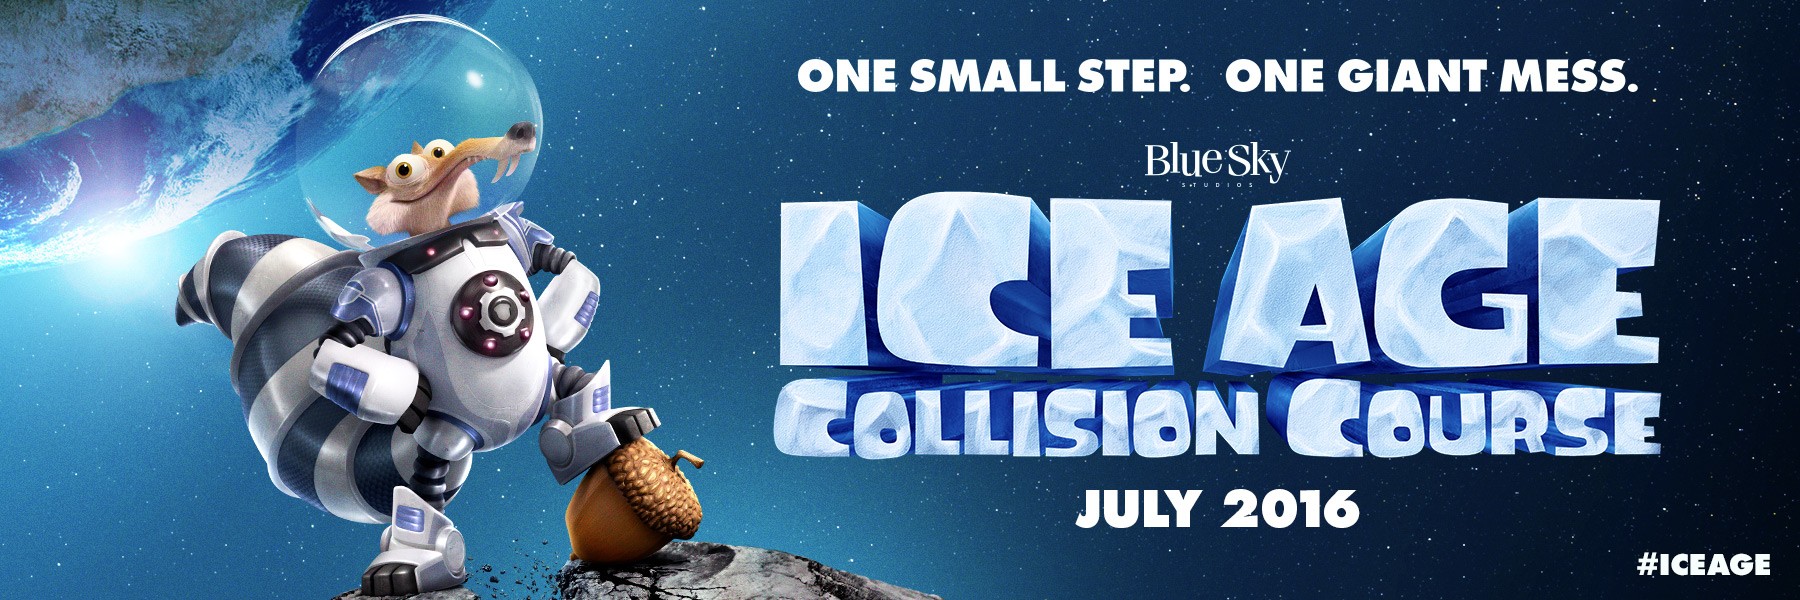 Collision Course - Ice Age 5: Collision Course Photo (39436664) - Fanpop